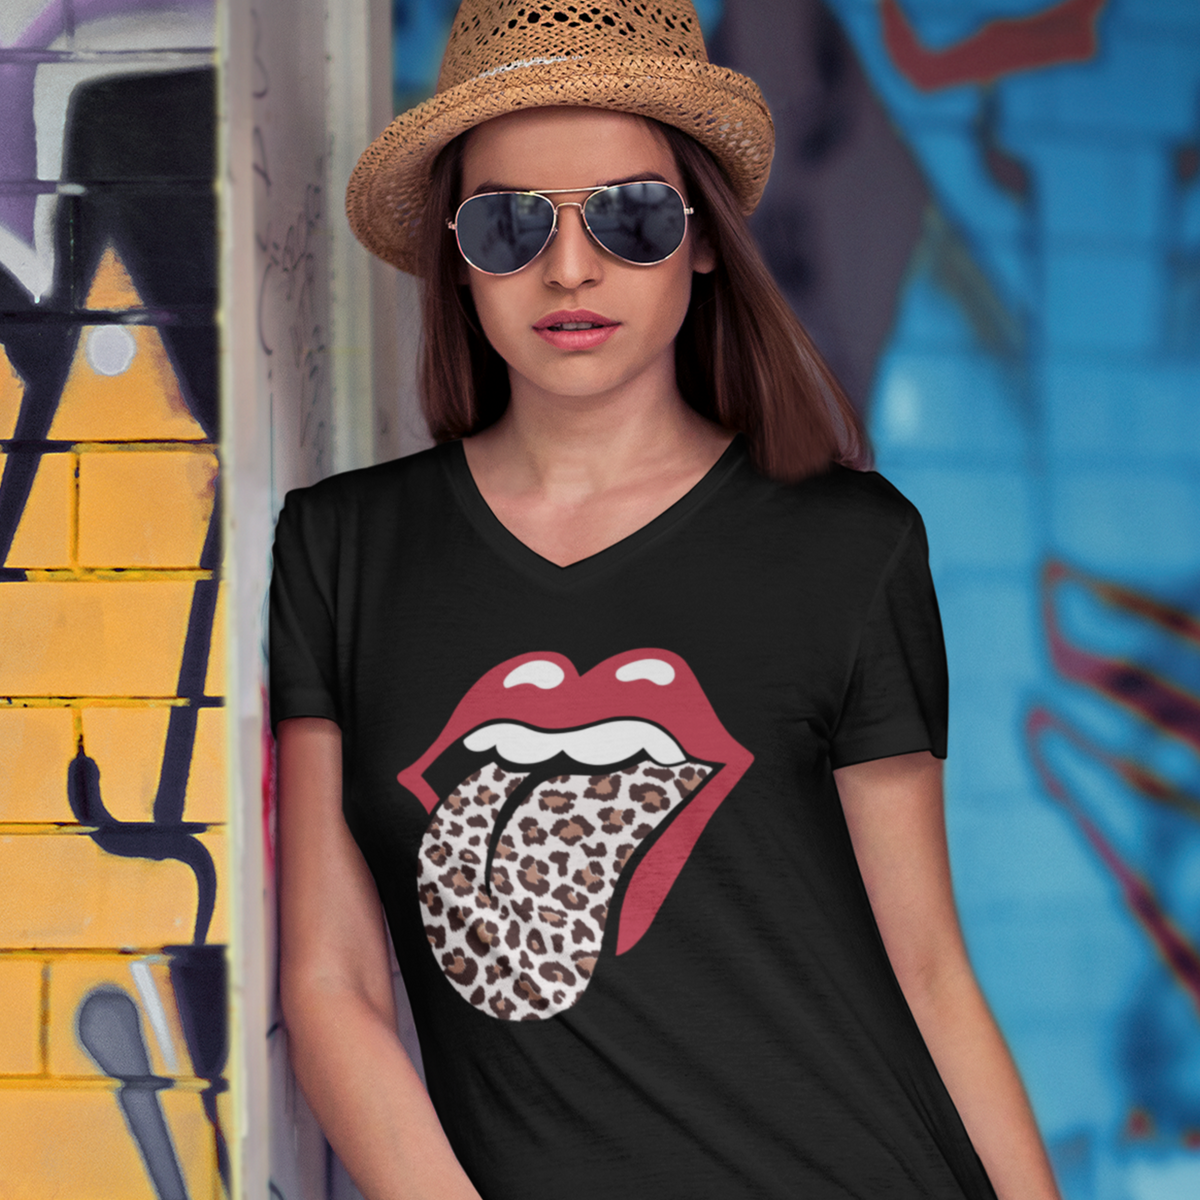 Leopard Print Tongue Red Lips T-shirt l Vintage Rock 'n Roll Gift | Unisex Jersey V-neck T-shirt